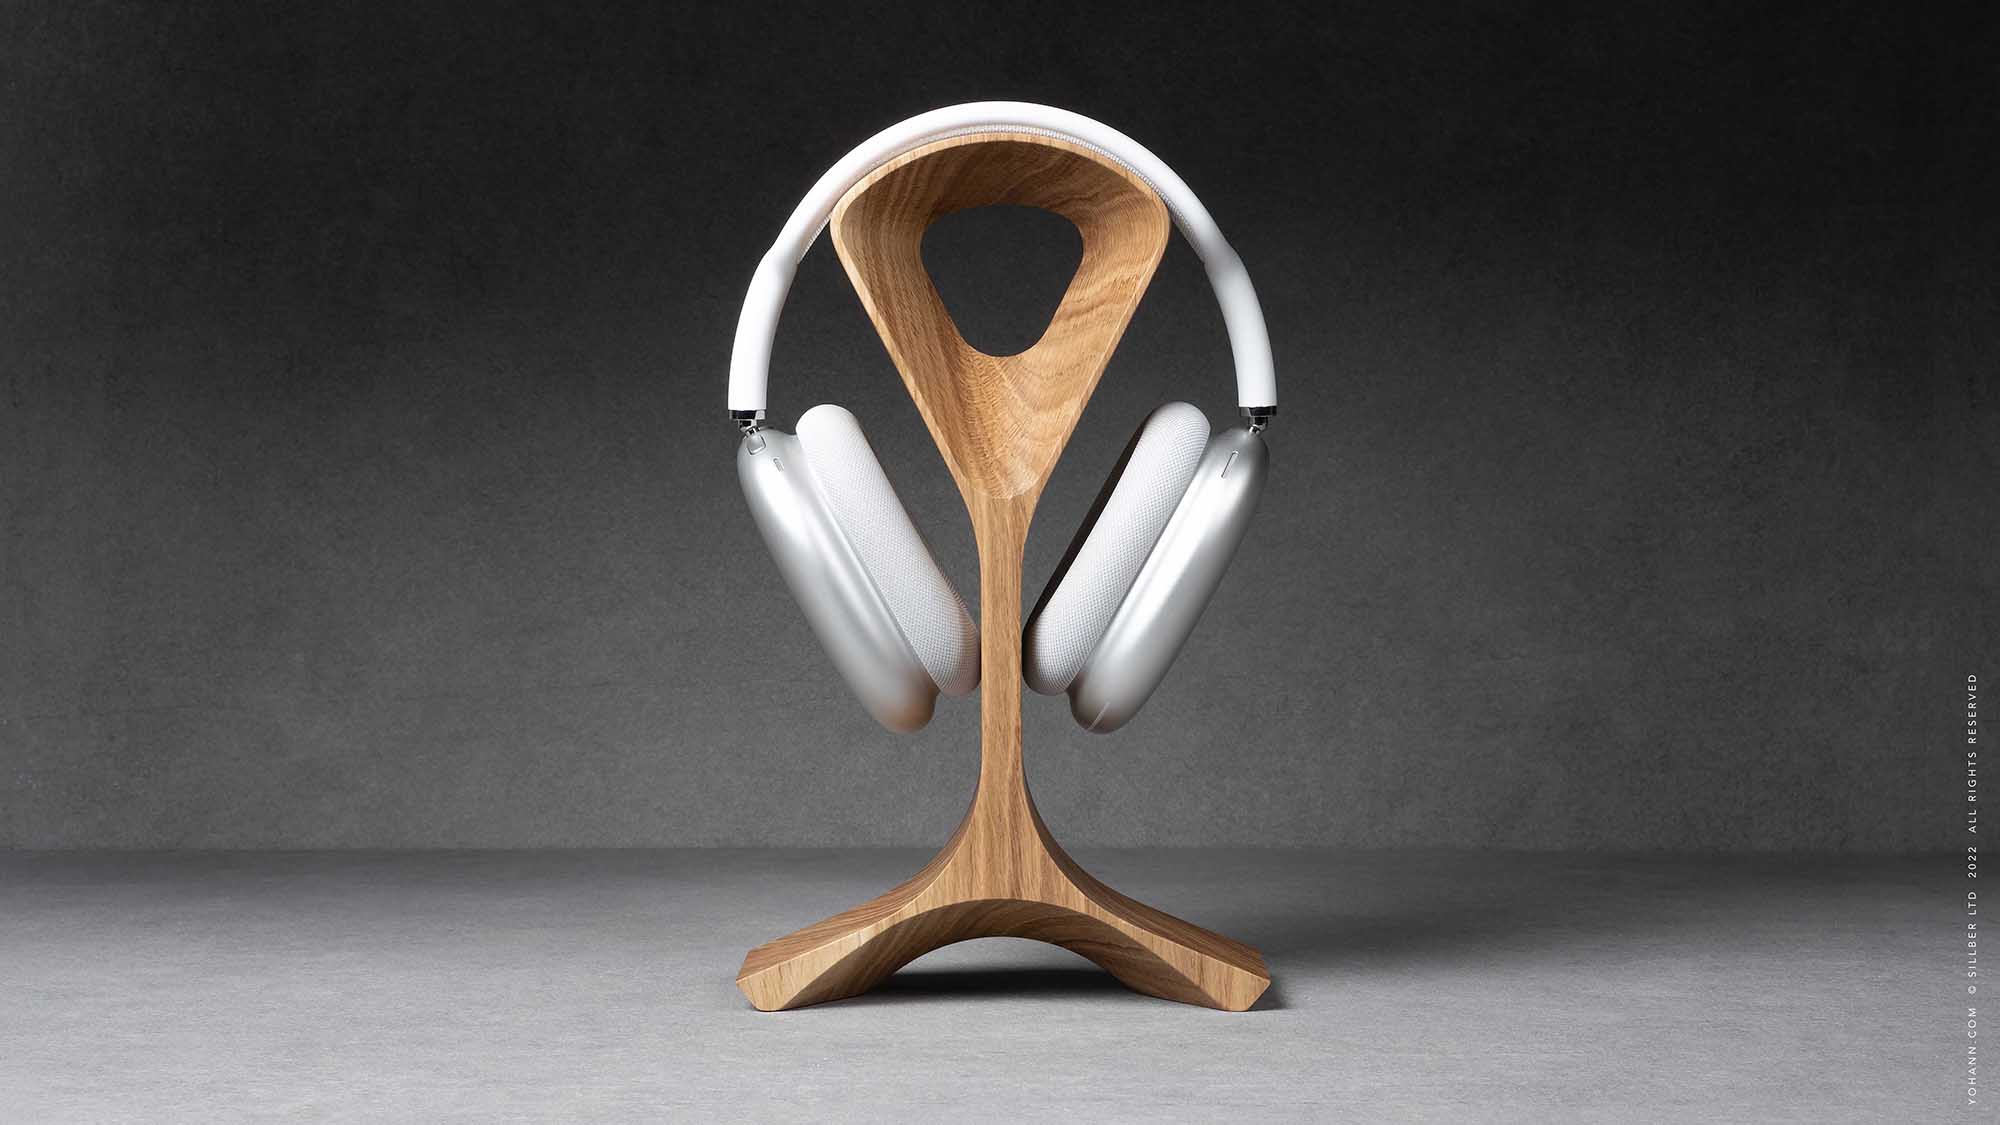 Openhagen  Decorative Wooden Headphone Stand